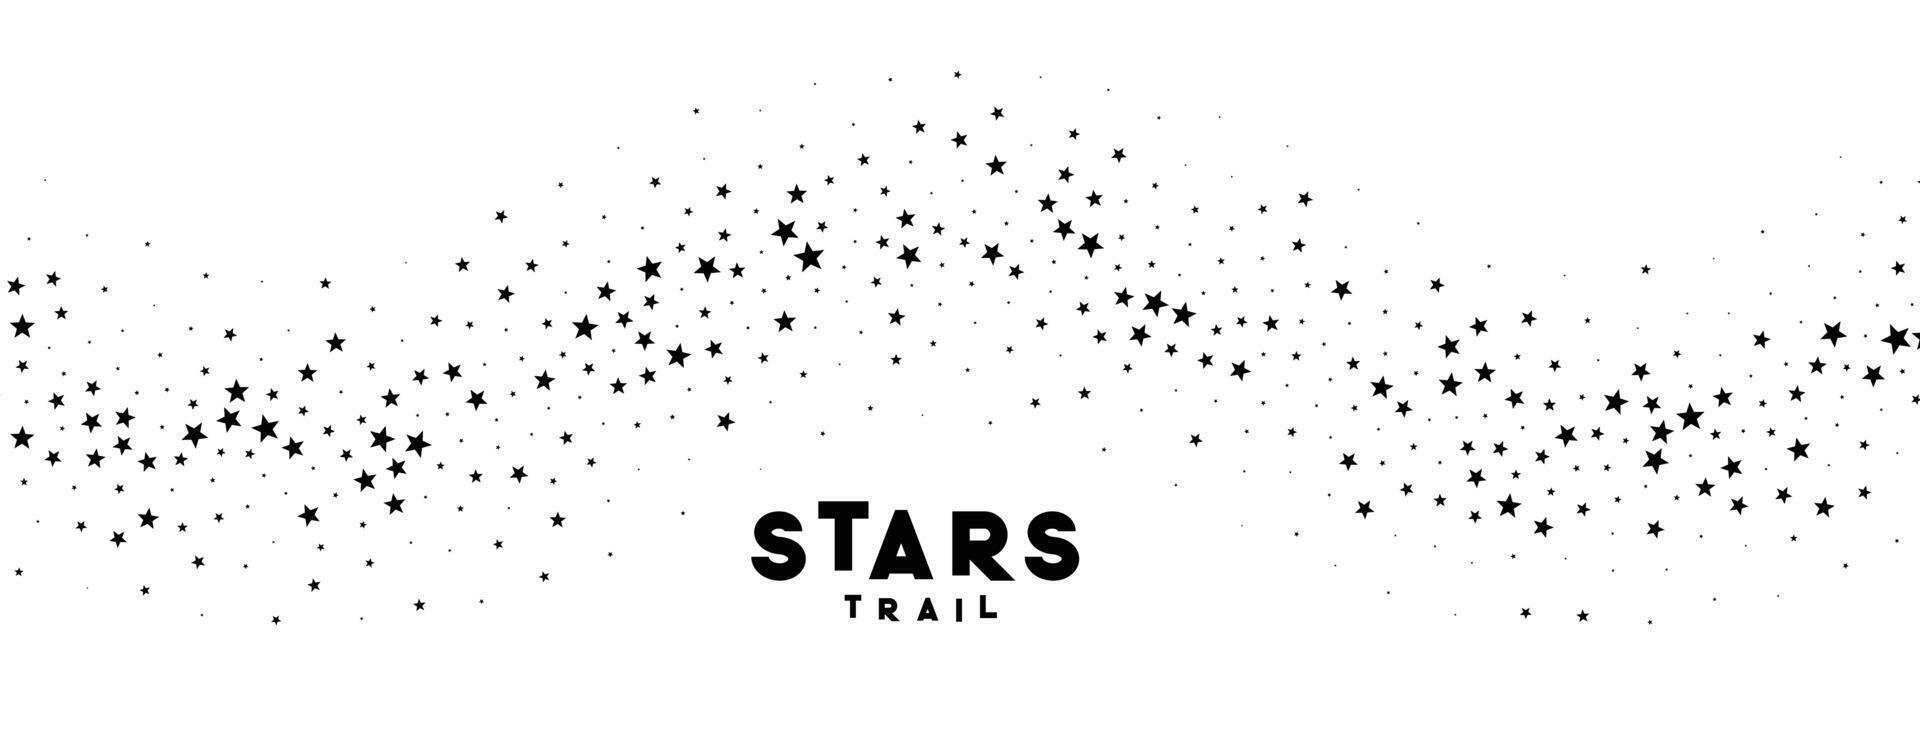 elegant scattered stars wavy trail path white background vector